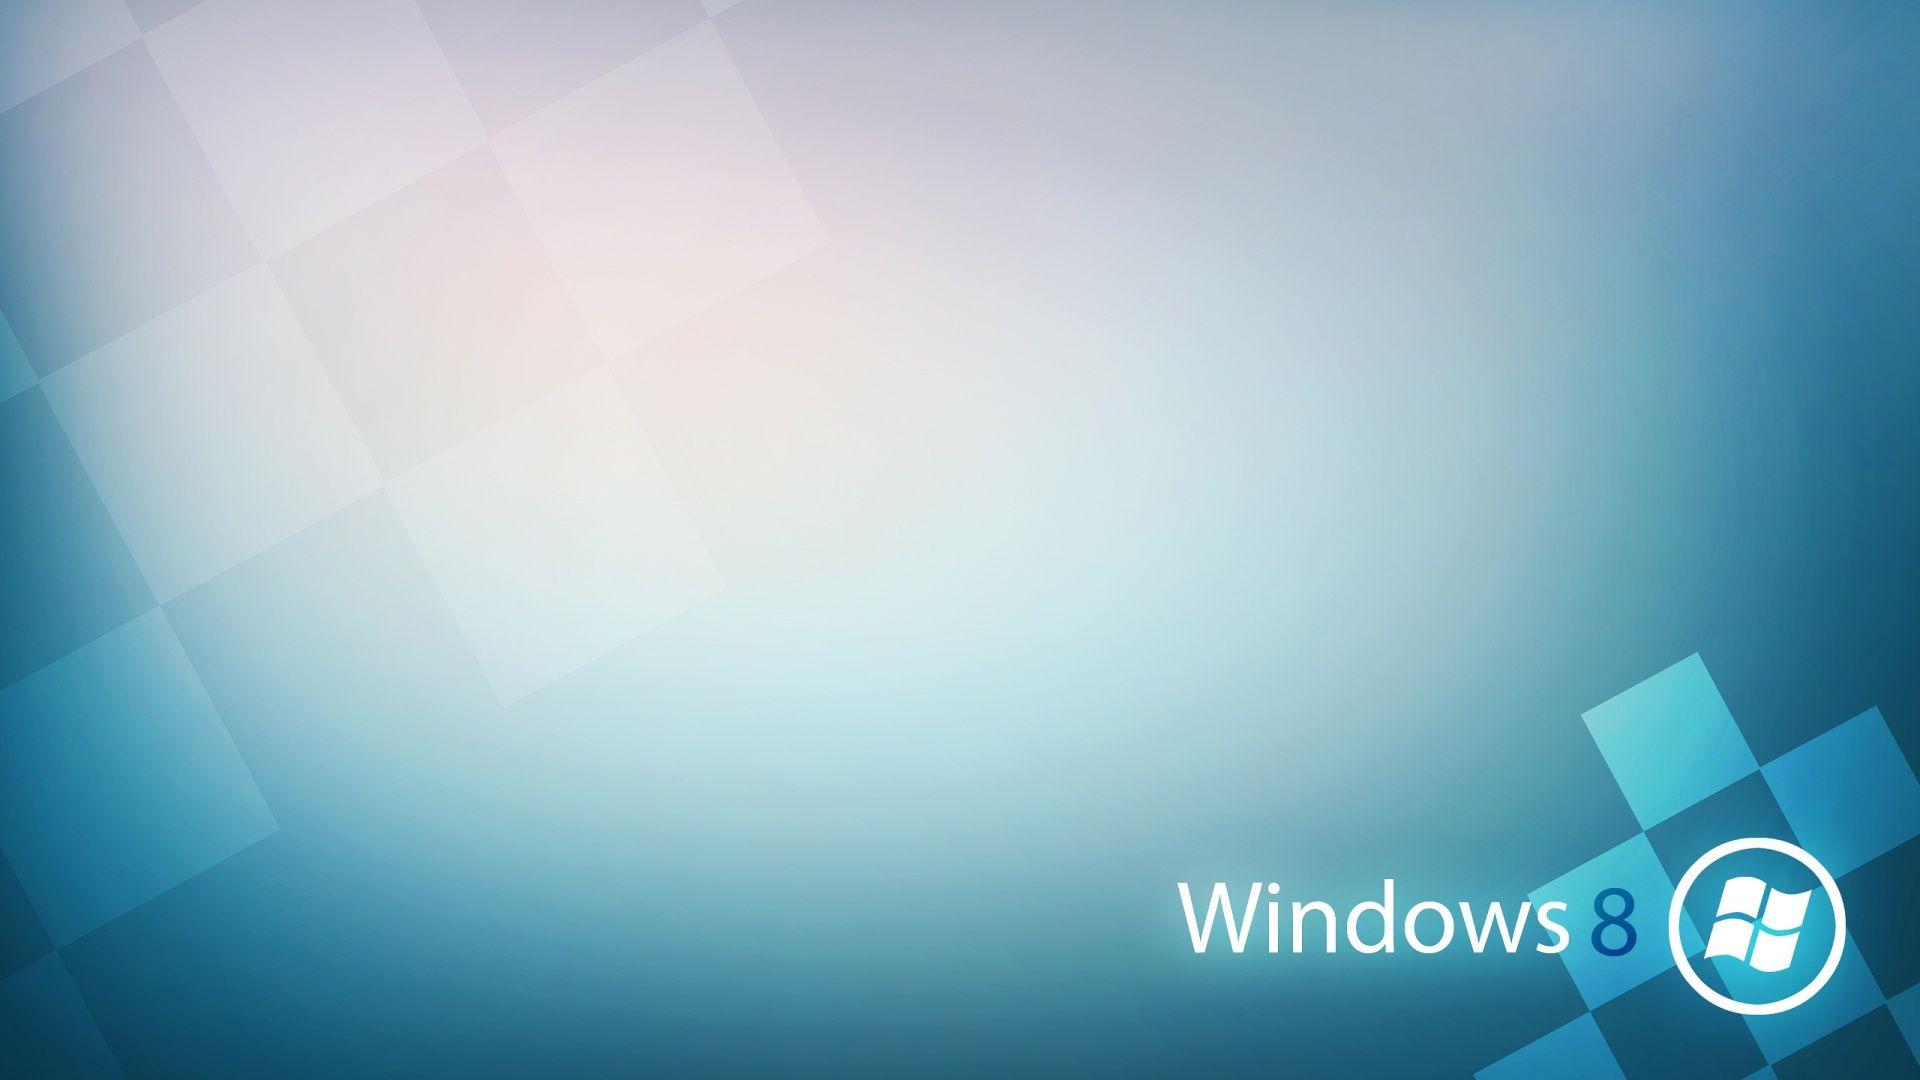 Windows 8 HD Wallpaper Backgrounds 1080p